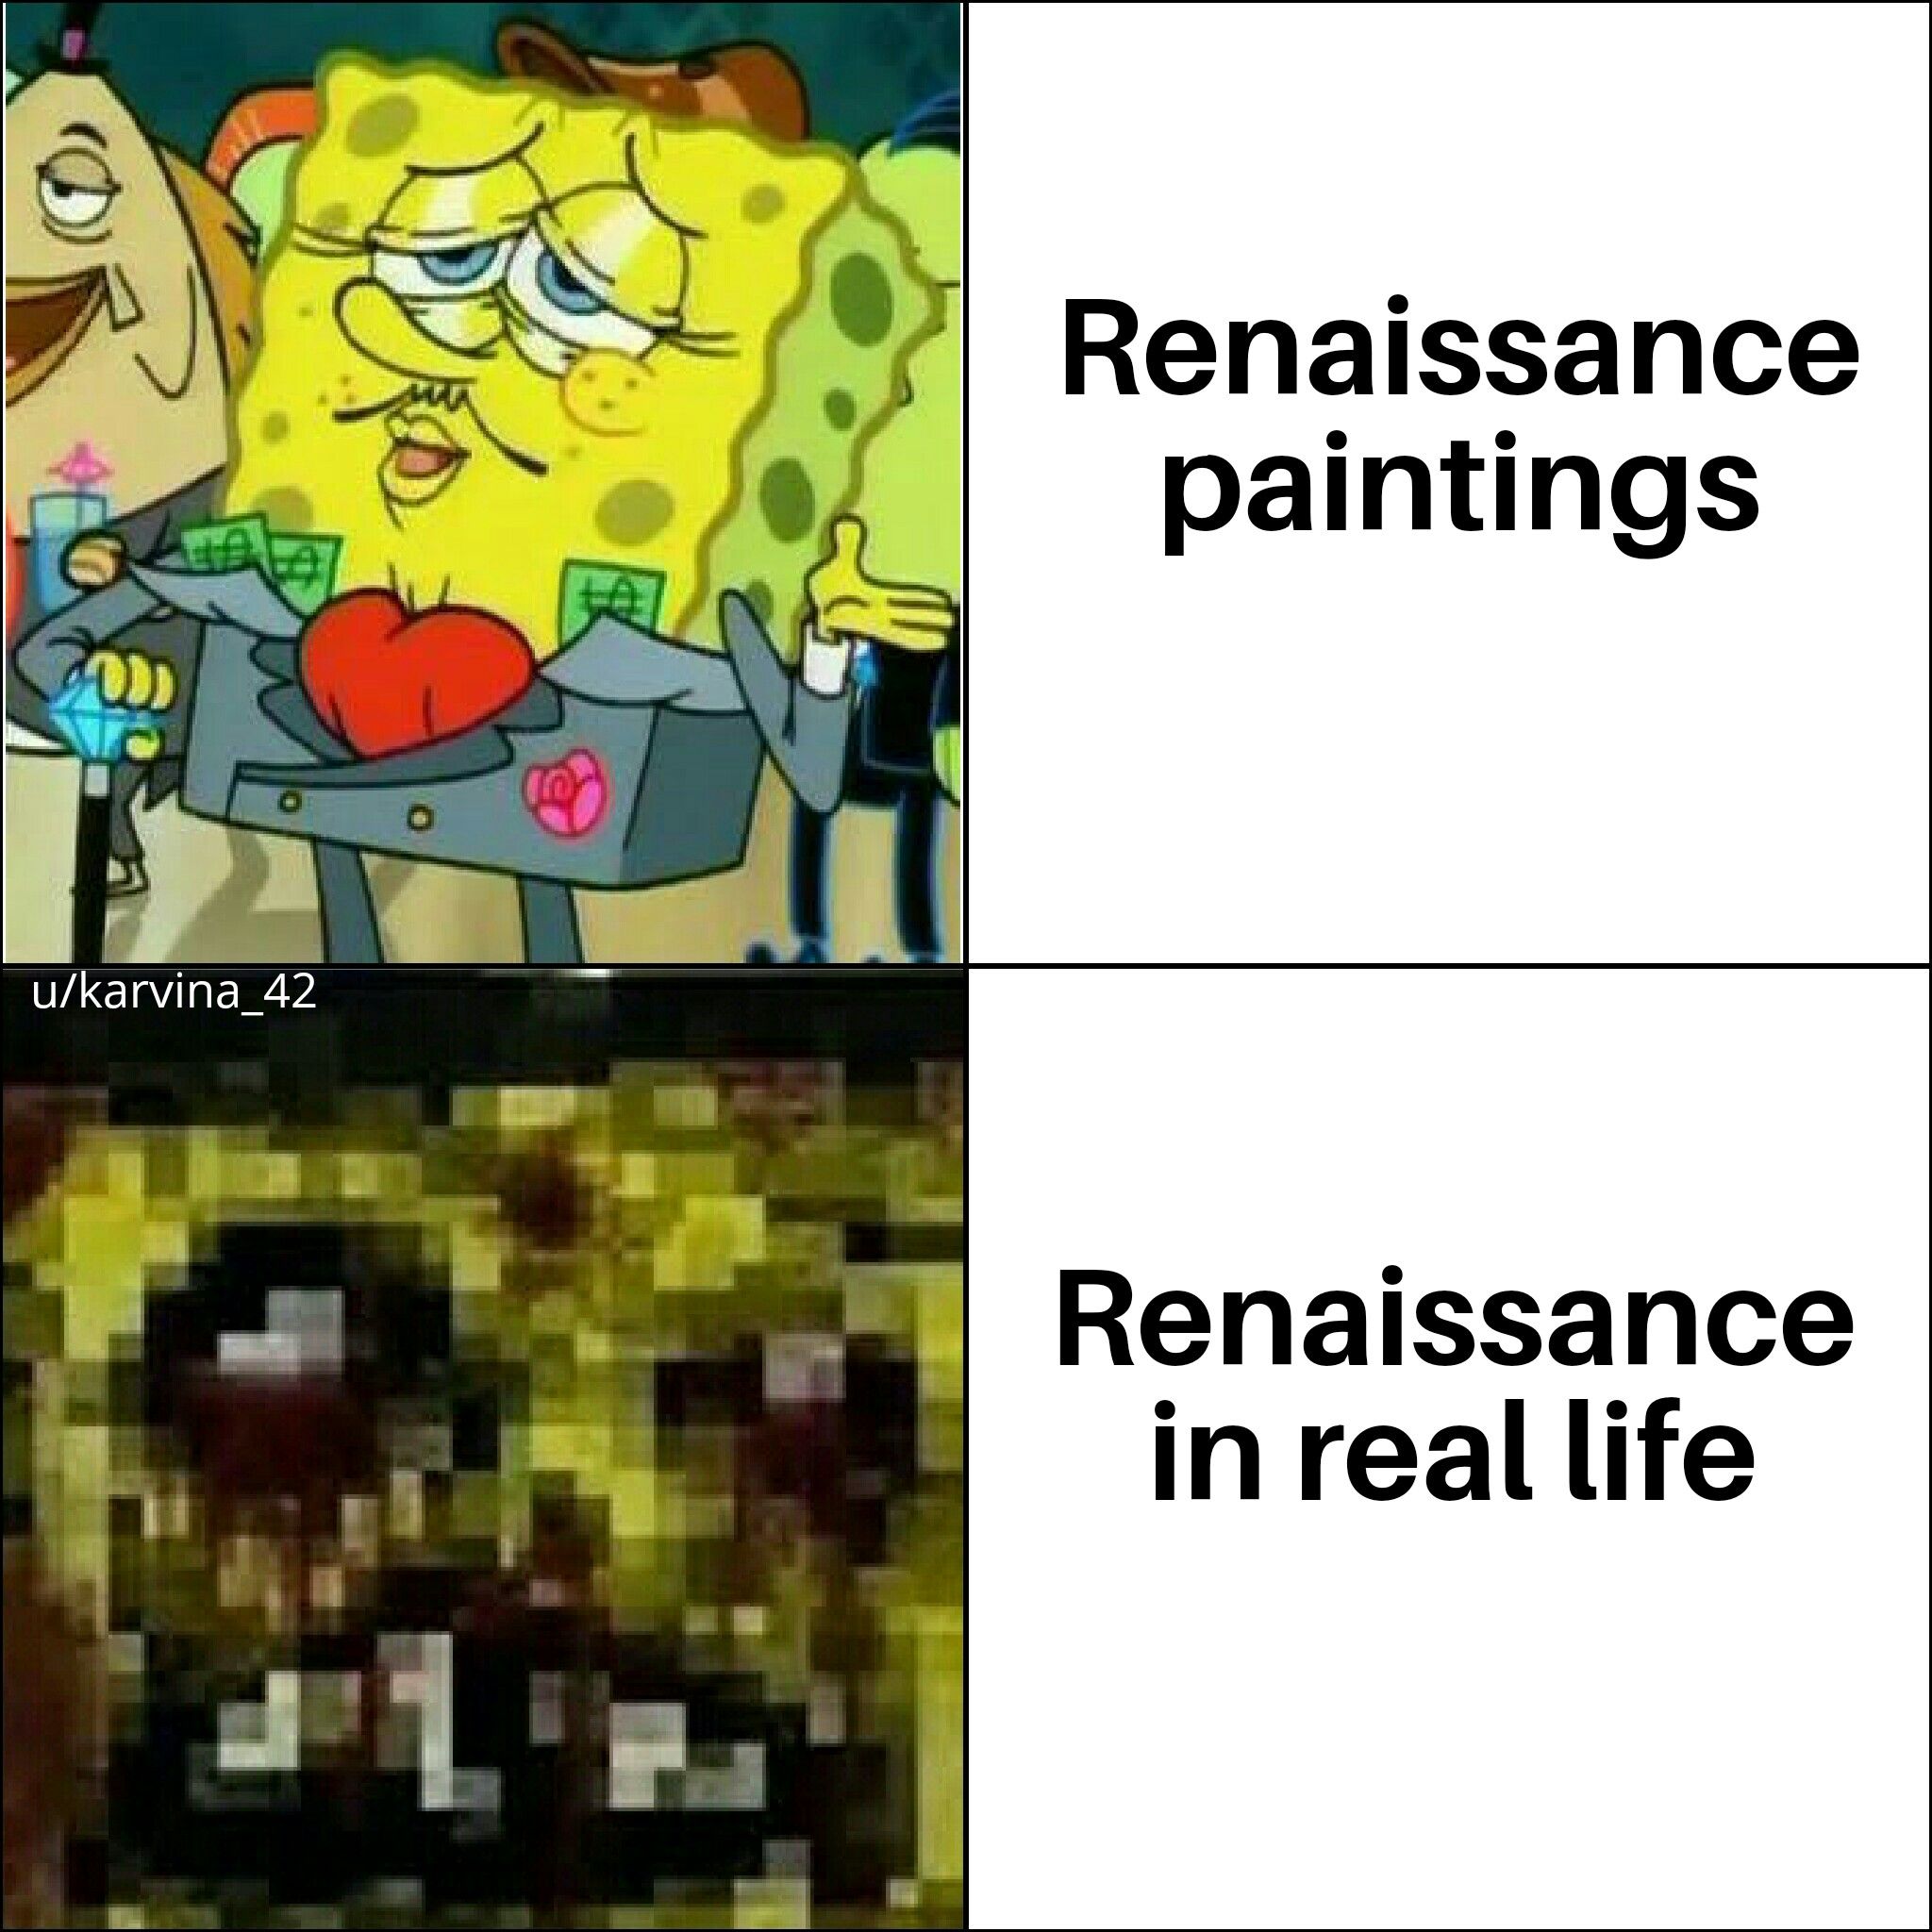 Renaissance do be like that